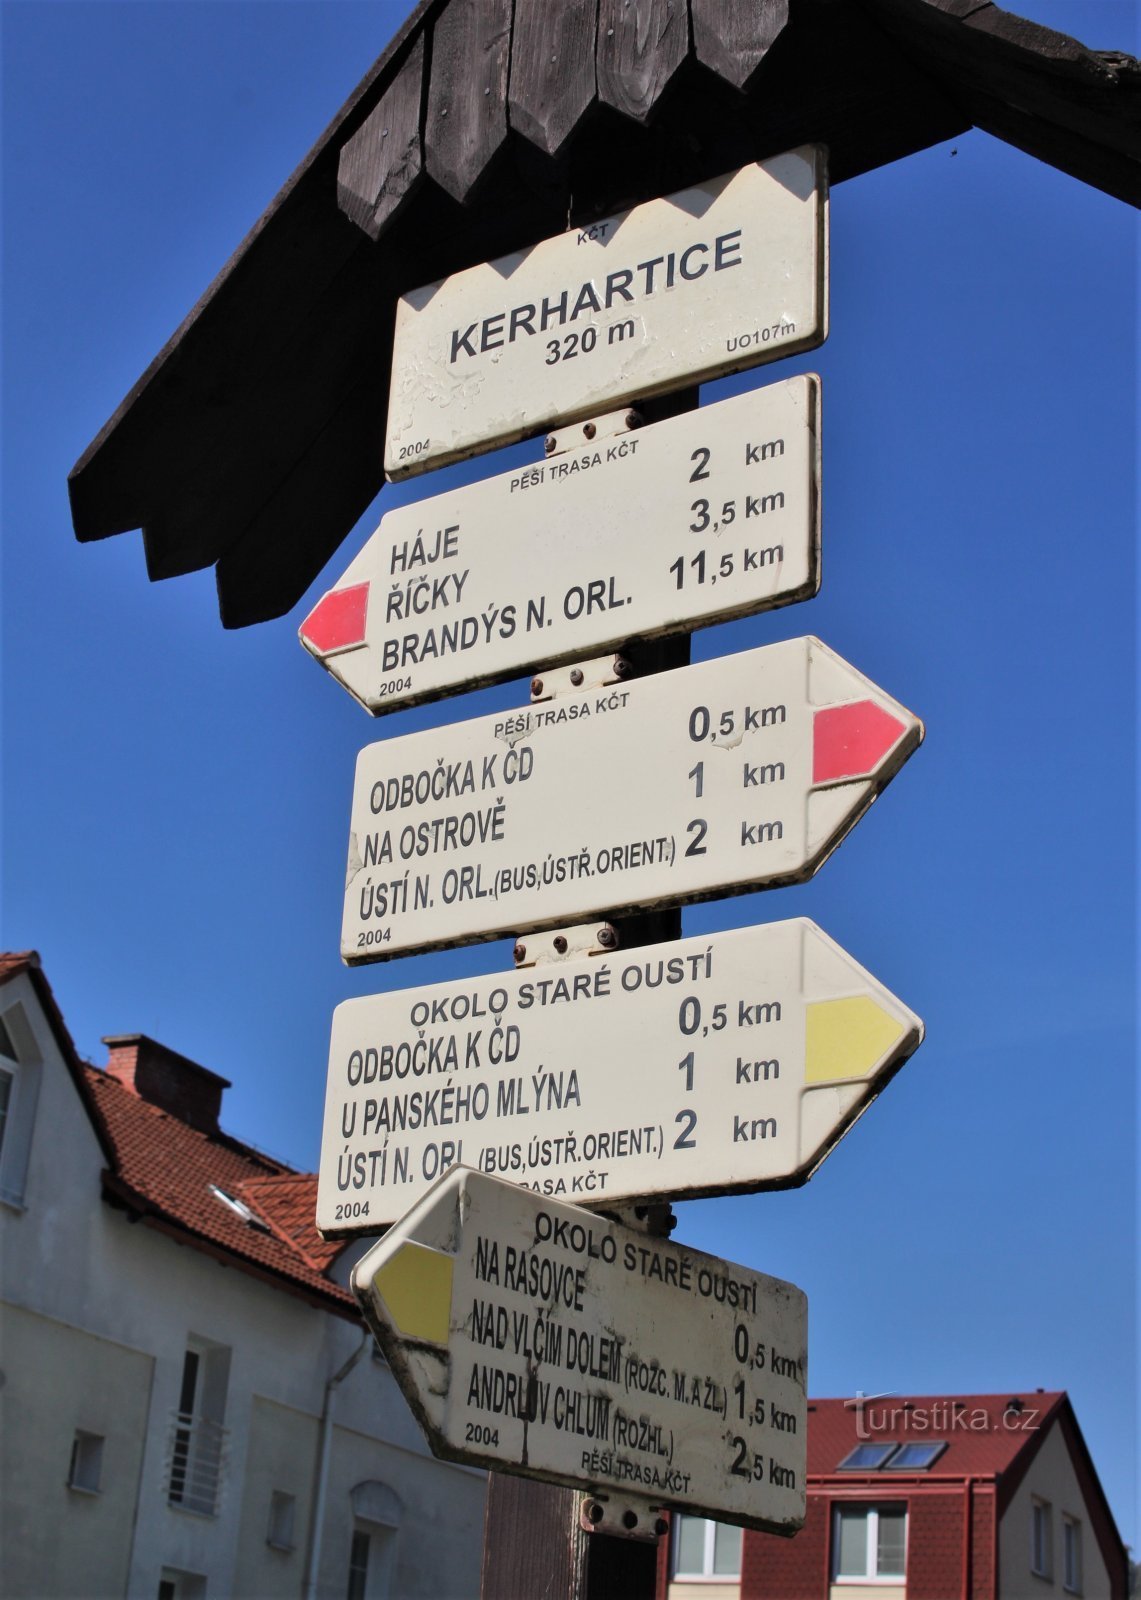 Туристический перекресток Керхартис